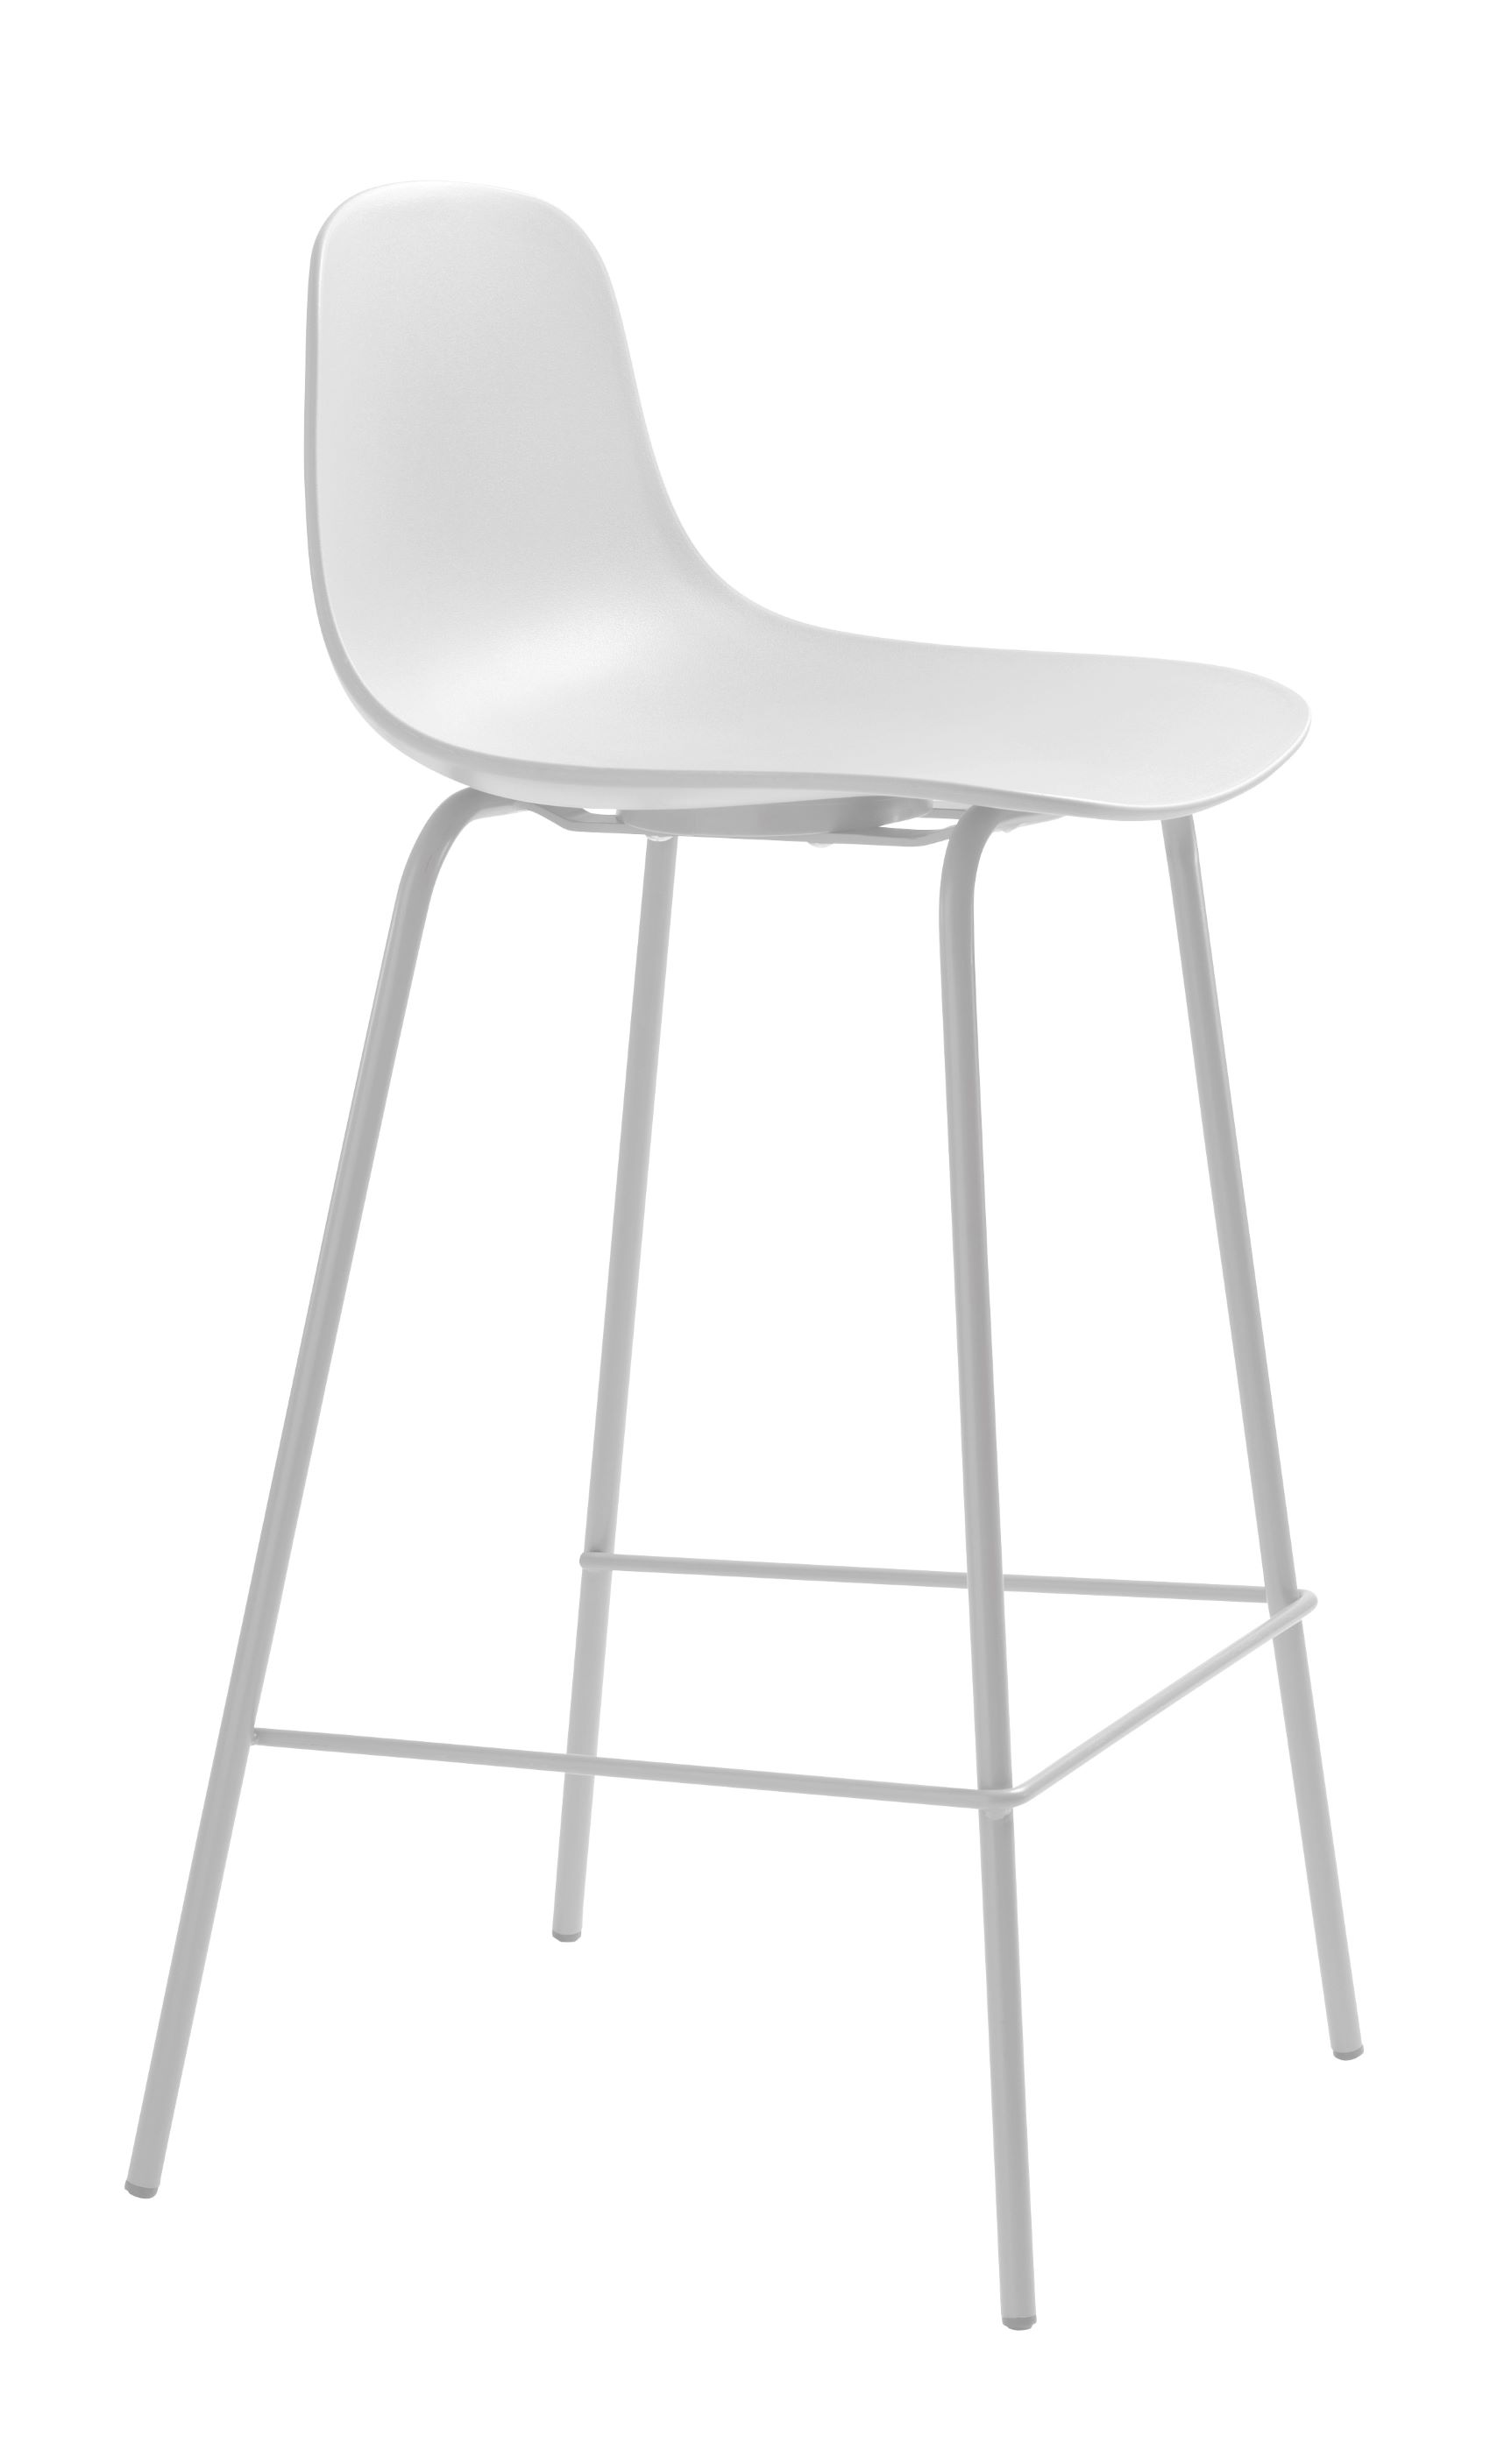 Metall Barhocker Whitby - Kunststoff Sitzschale - skandinavisches Design - weiß